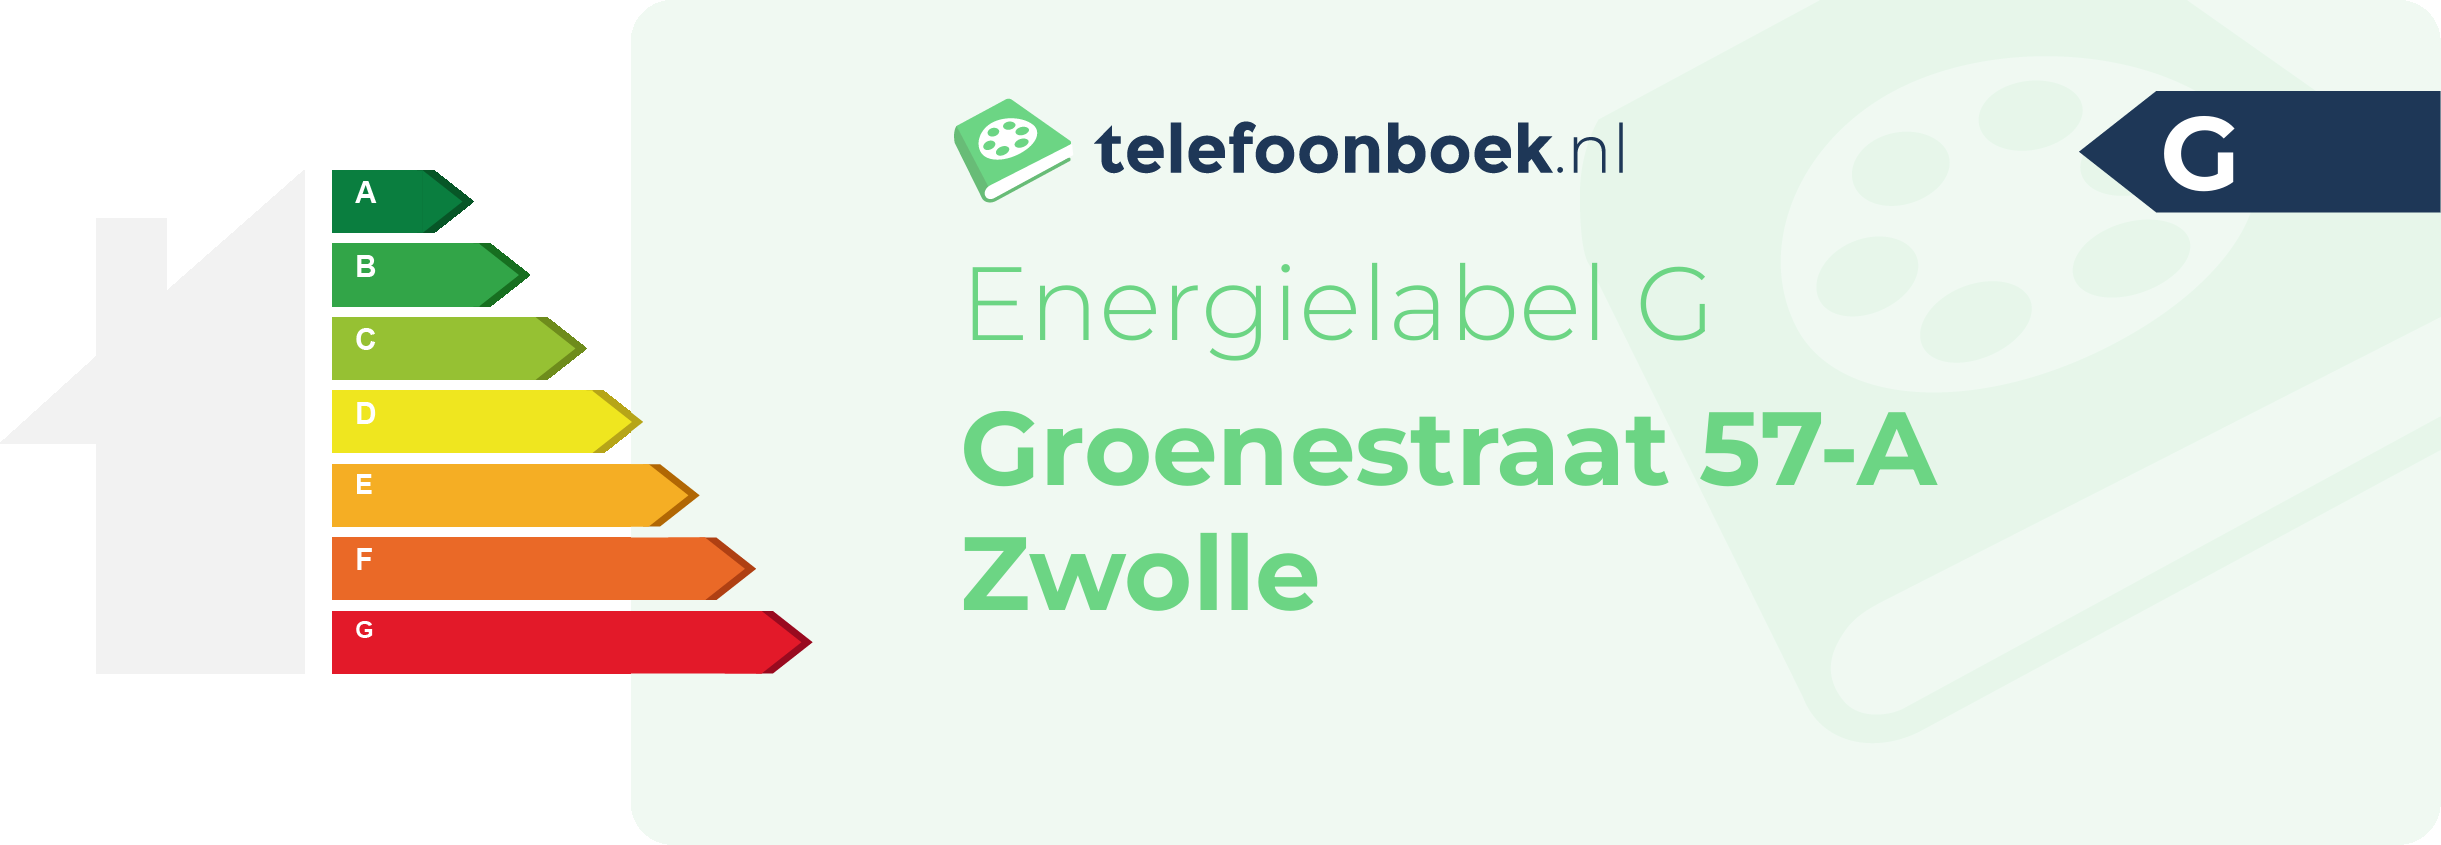 Energielabel Groenestraat 57-A Zwolle